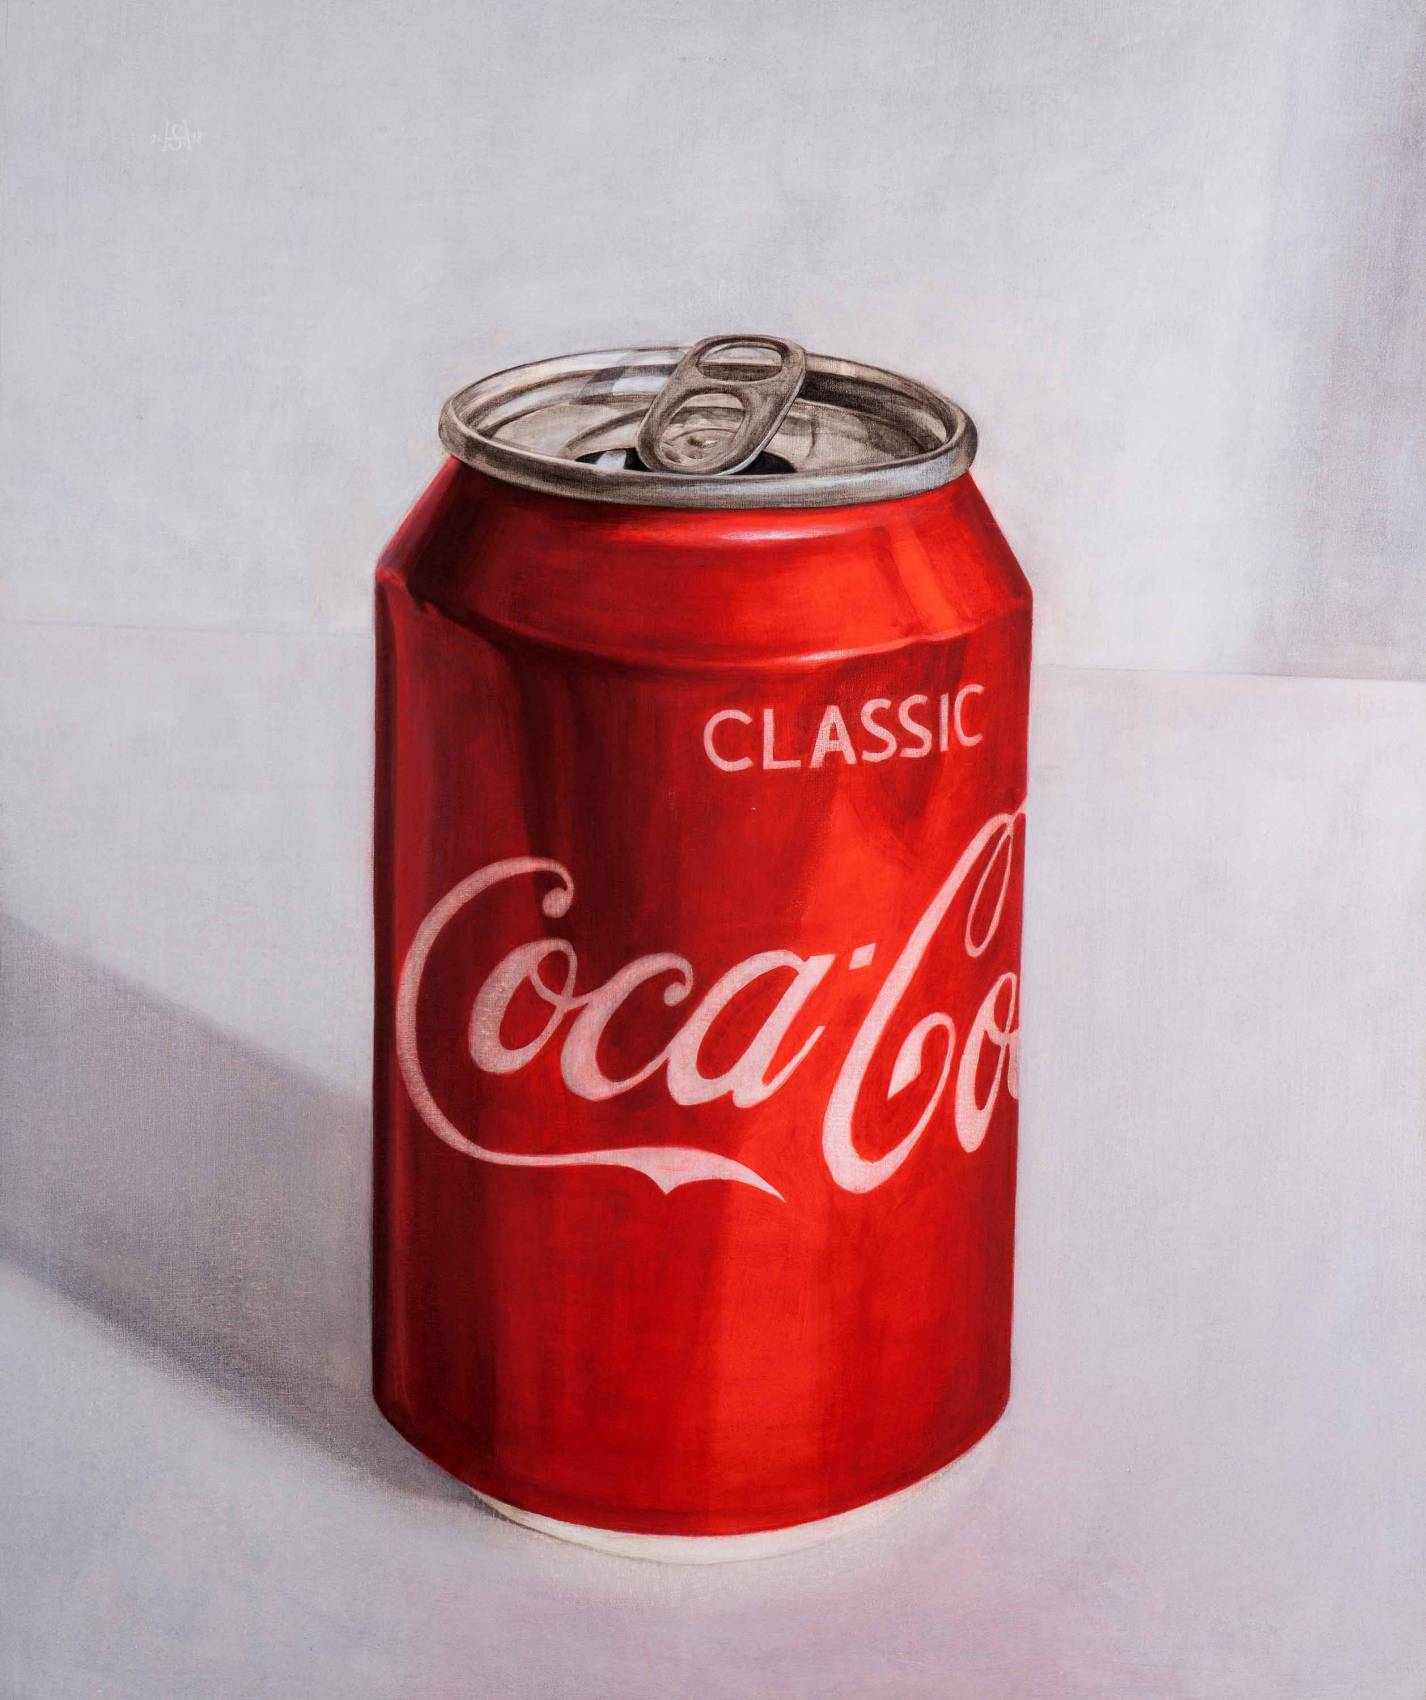 Classic Coca Co, 2018. Acryl auf Leinwand. 110 x 92 cm. Foto: Phillip Hiersemann